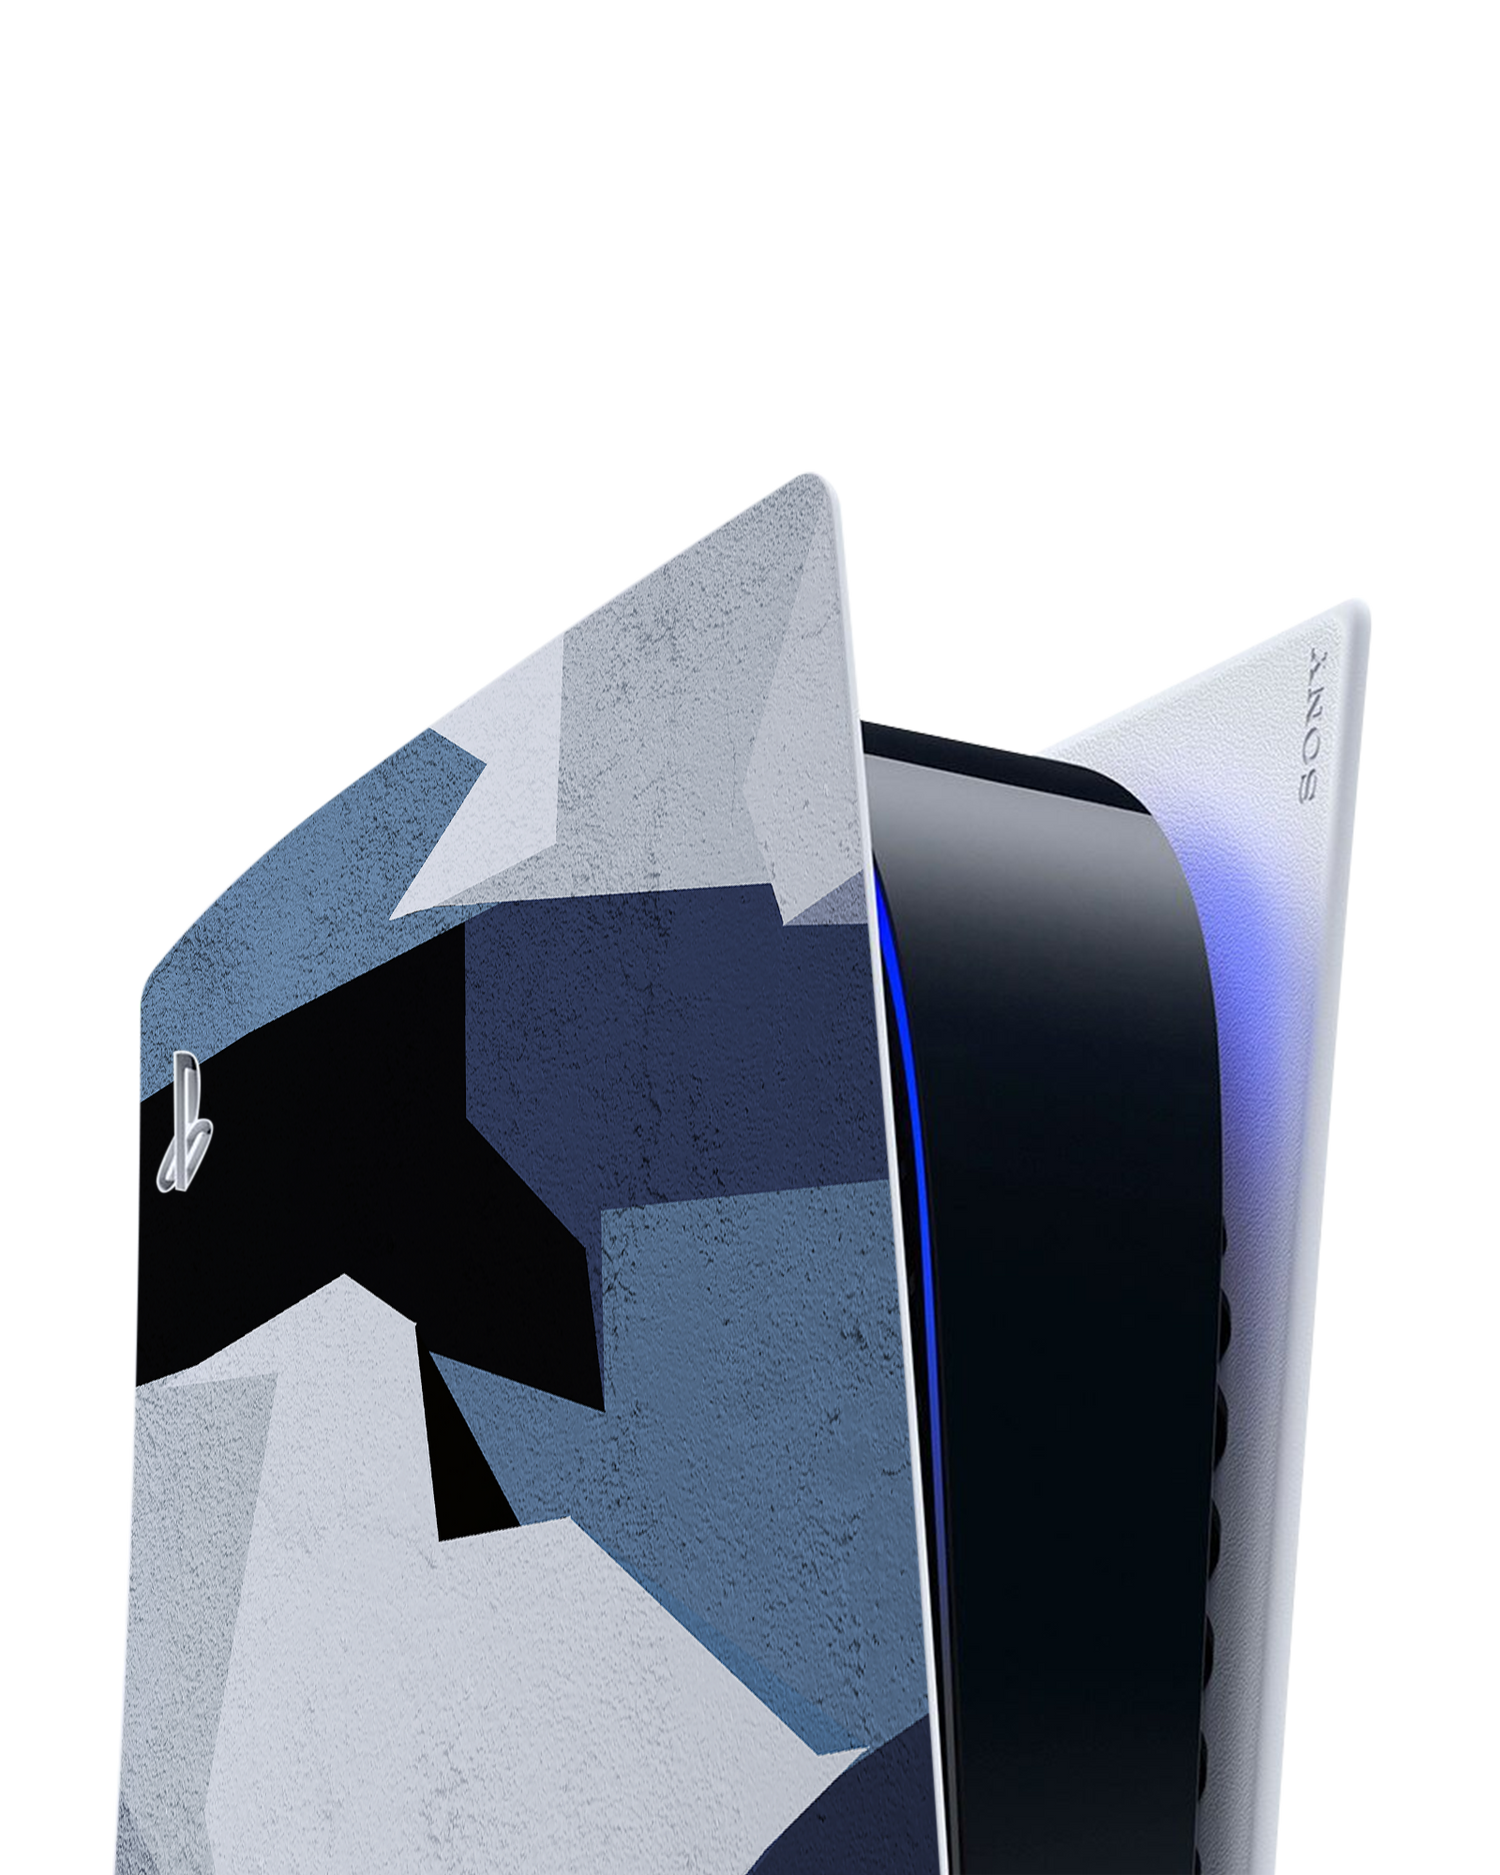 Geometric Camo Blue Console Skin for Sony PlayStation 5 Digital Edition: Detail shot